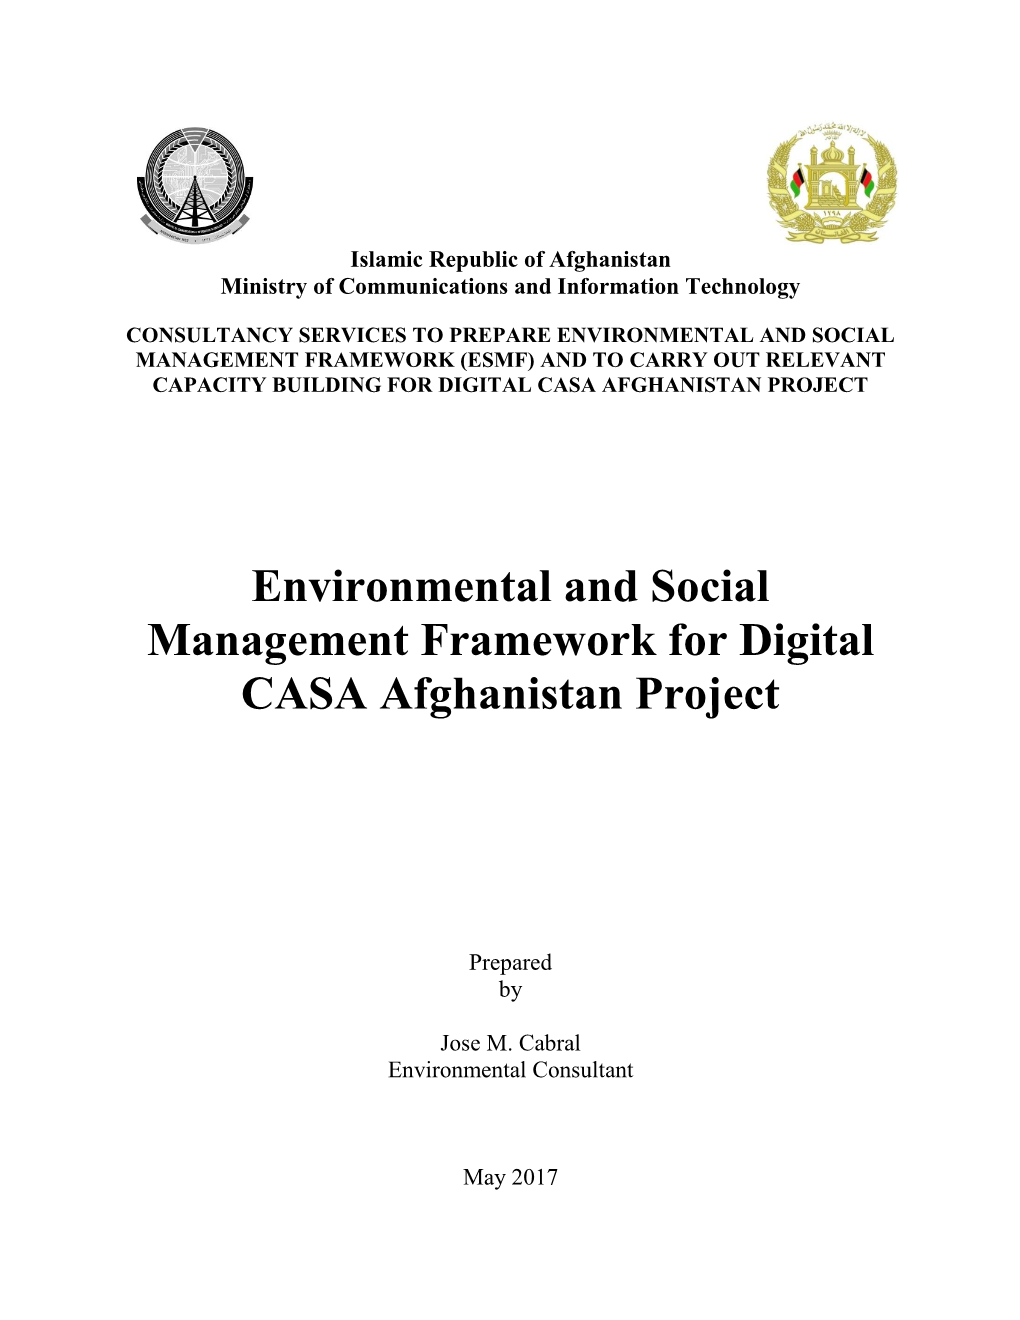 Environmental and Social Management Framework for Digital CASA Afghanistan Project